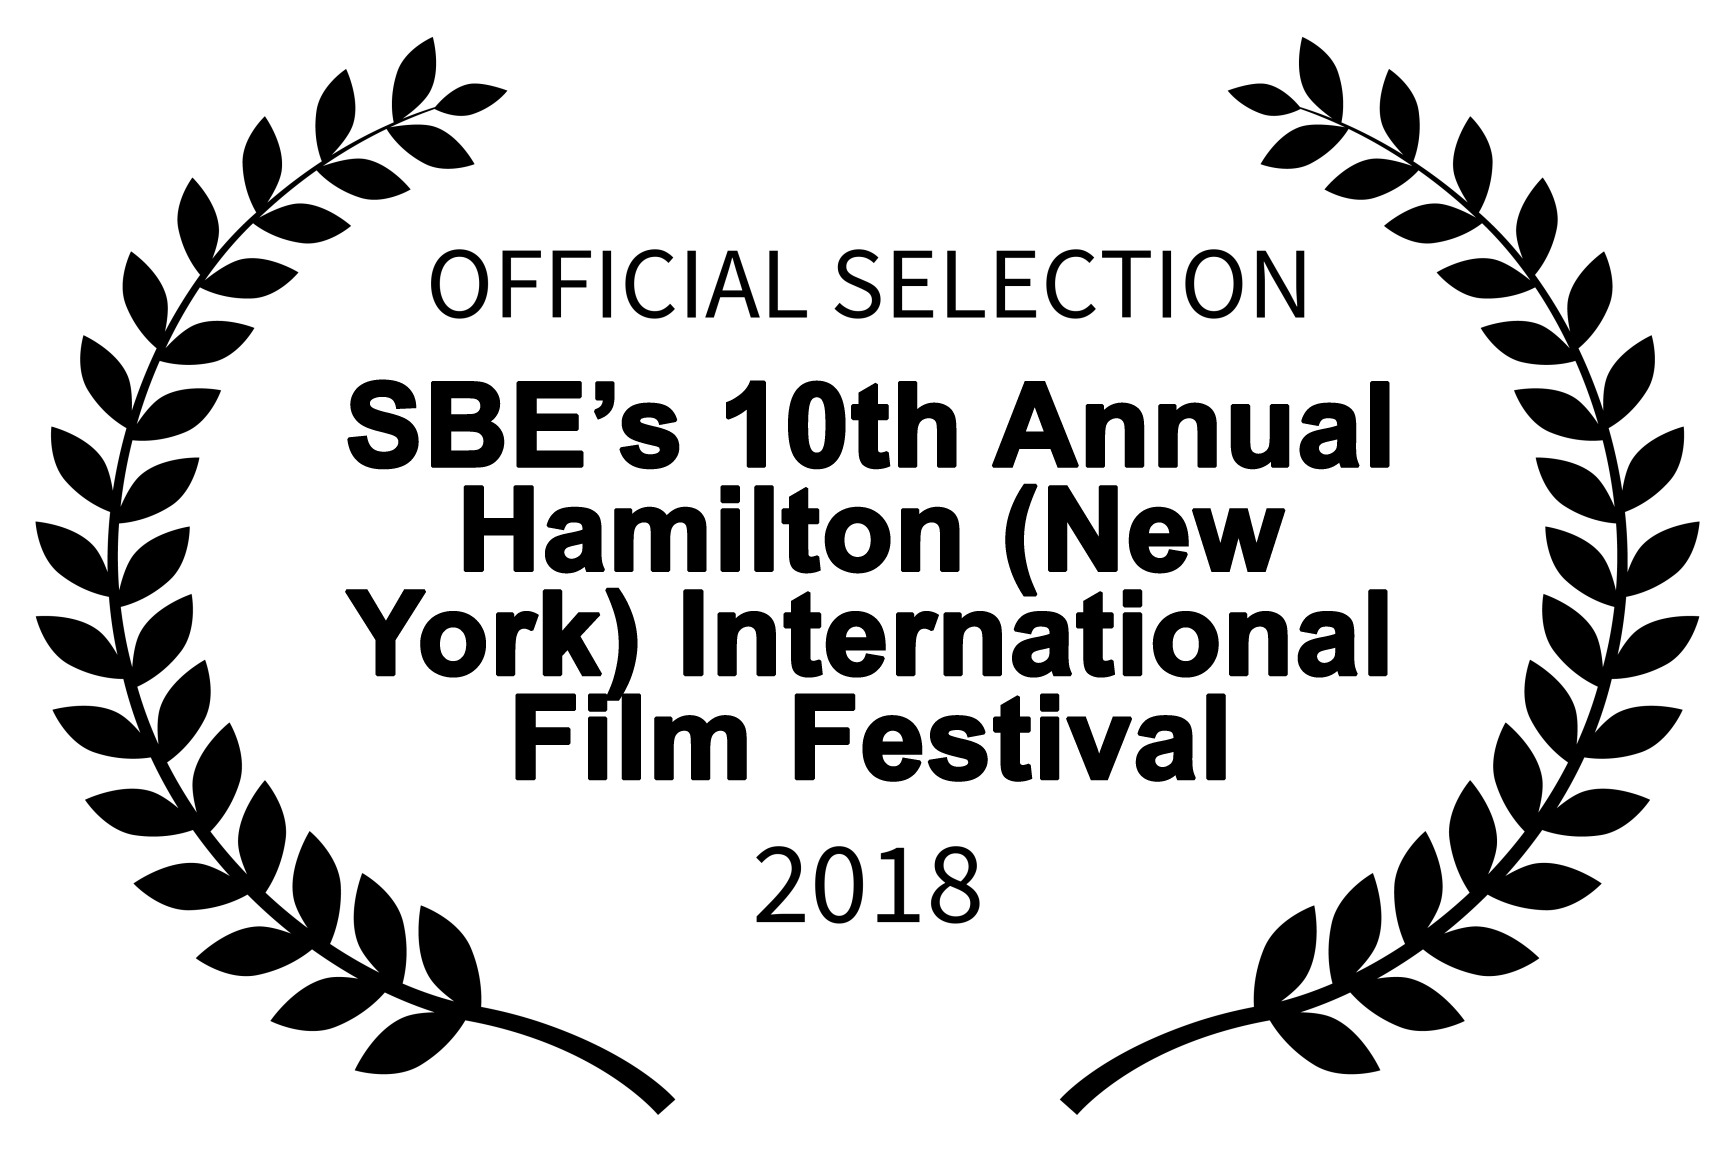 HIFF logo